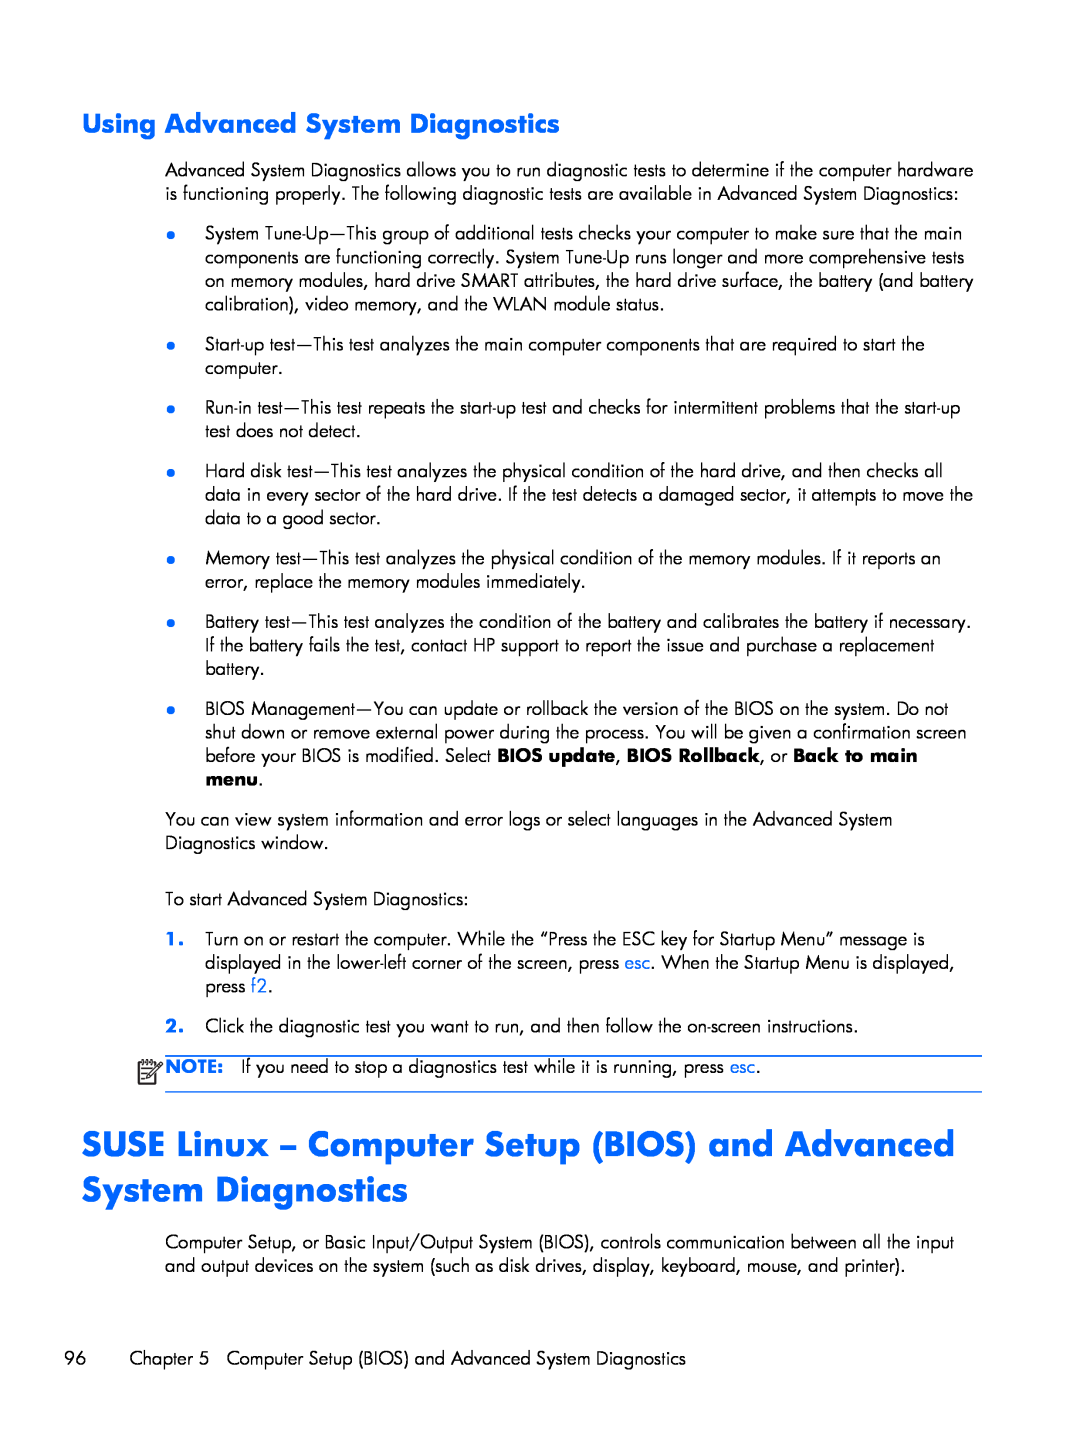 HP 9470m i7 Win8 D3K33UT#ABA manual SUSE Linux - Computer Setup BIOS and Advanced System Diagnostics 